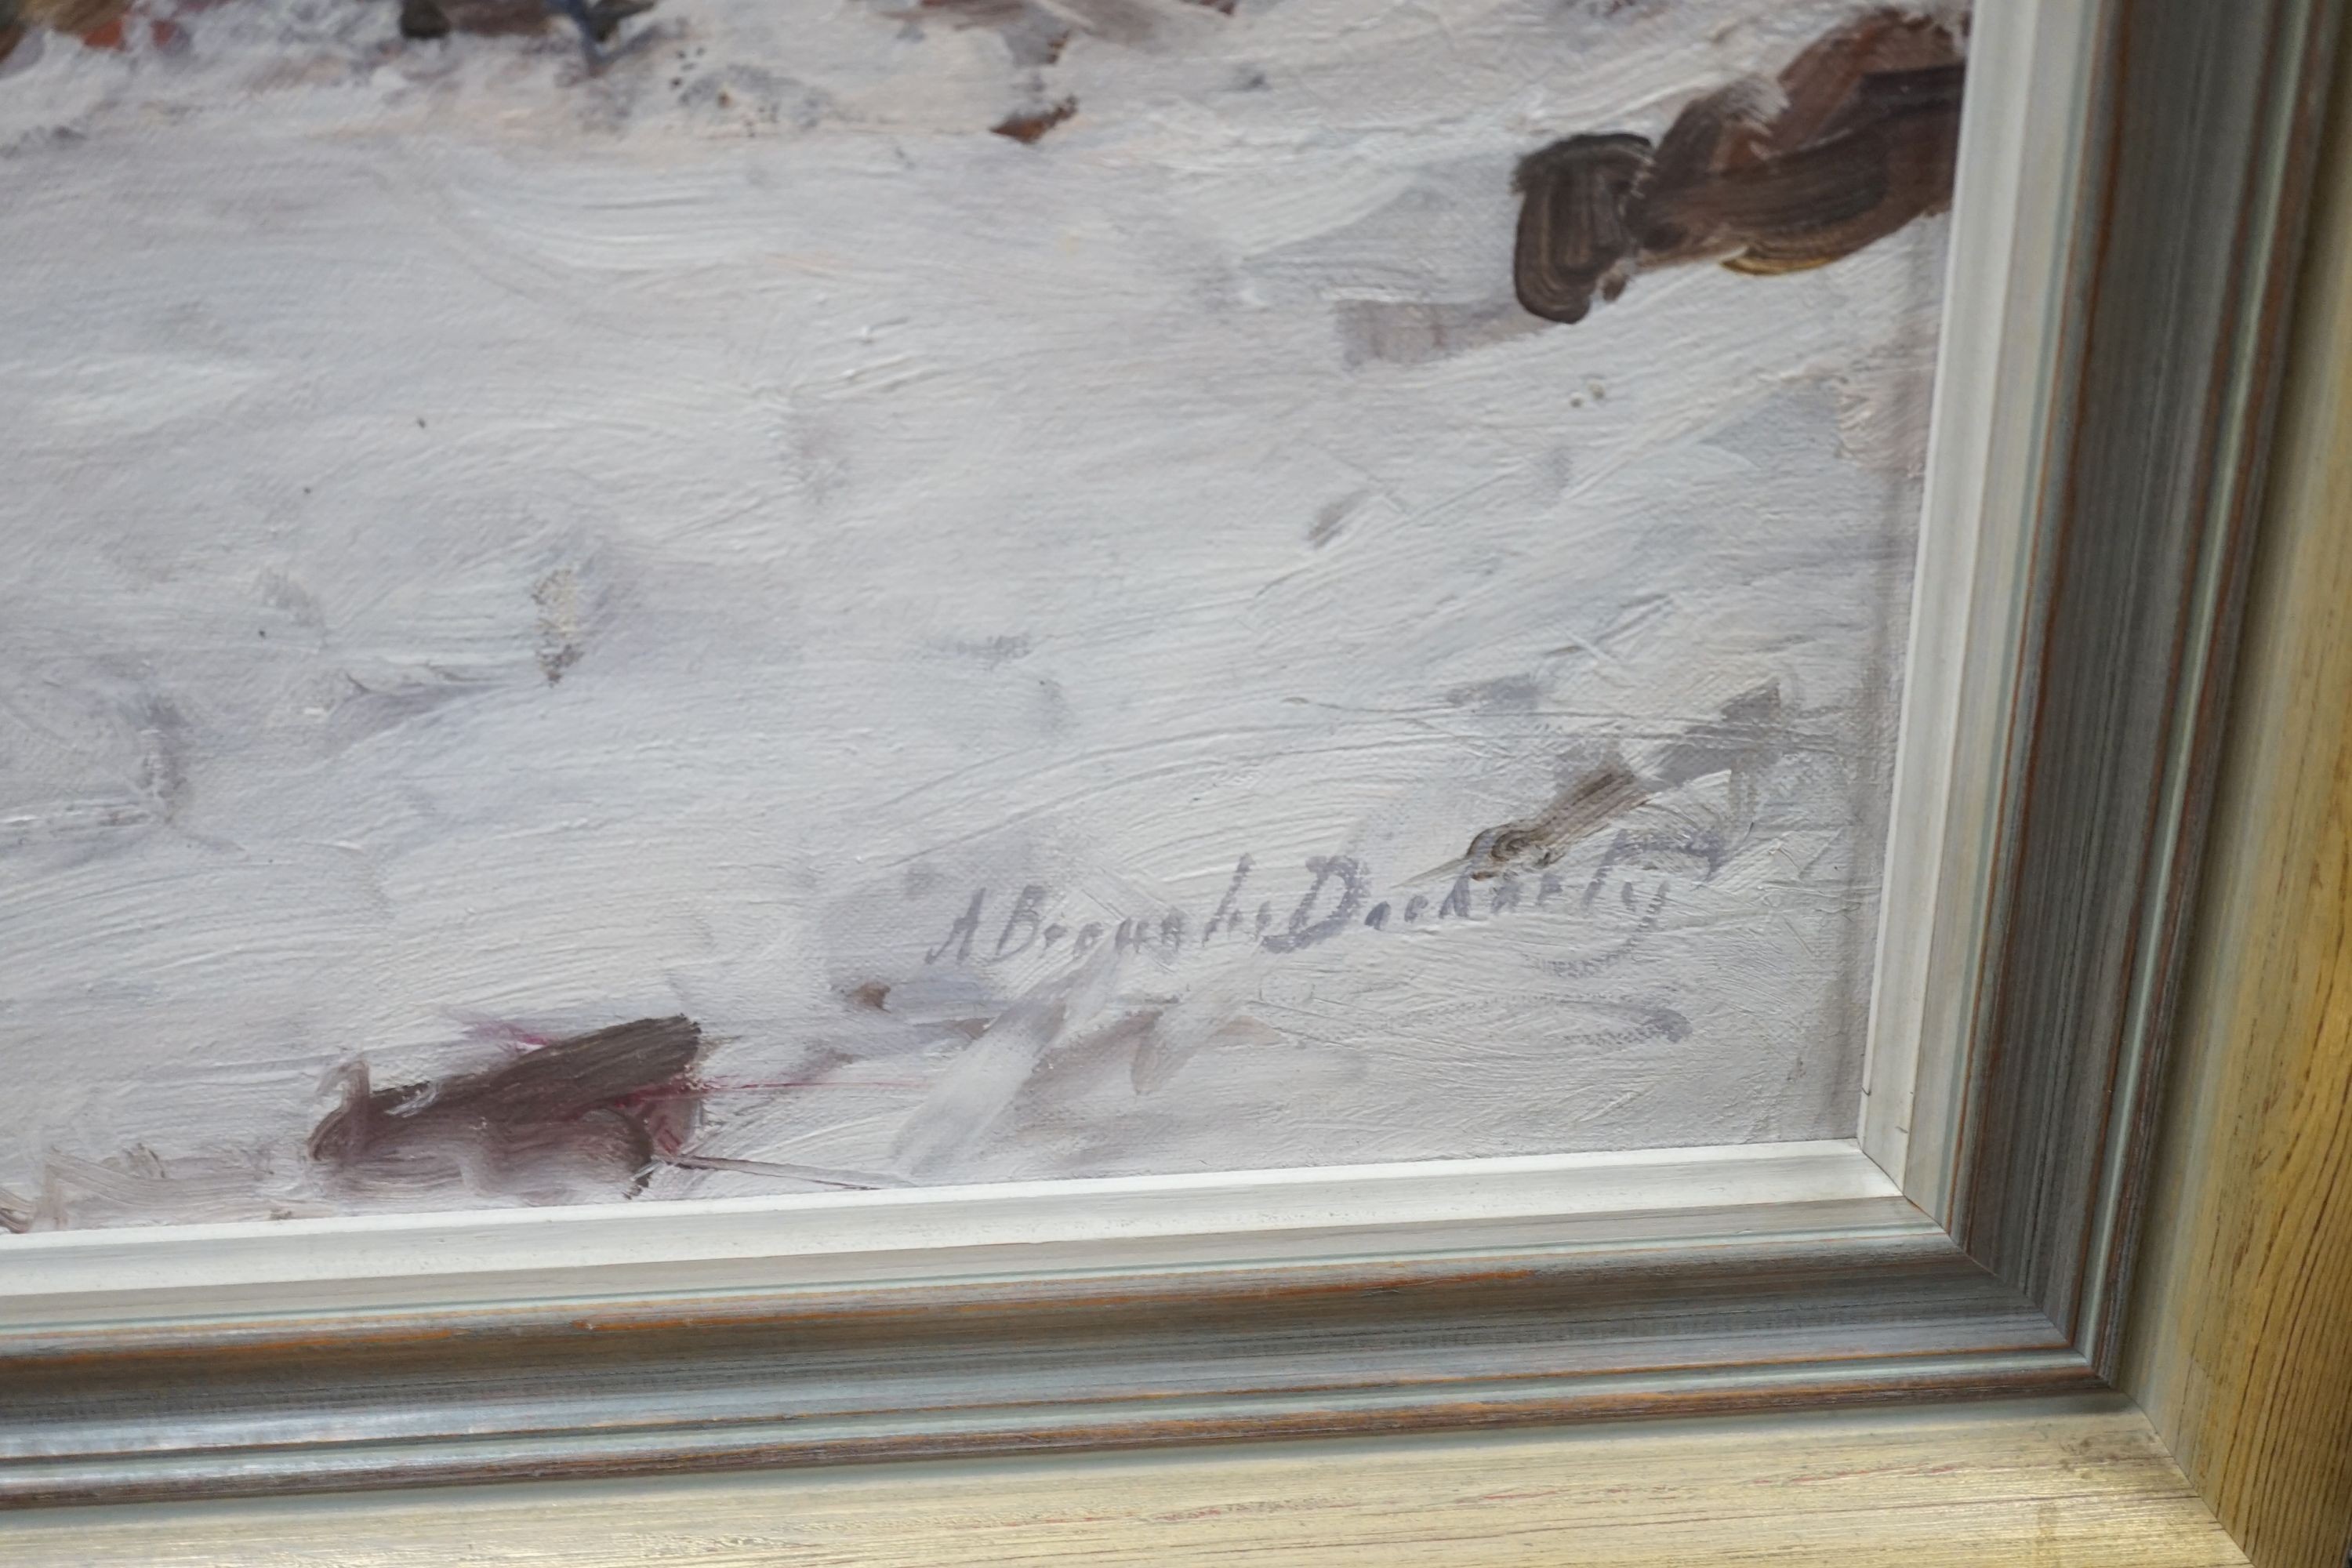 Alexander Brownlie Docharty (1862-1940) oil on canvas, winter river scene, signed, 71.5 cm X 107cm